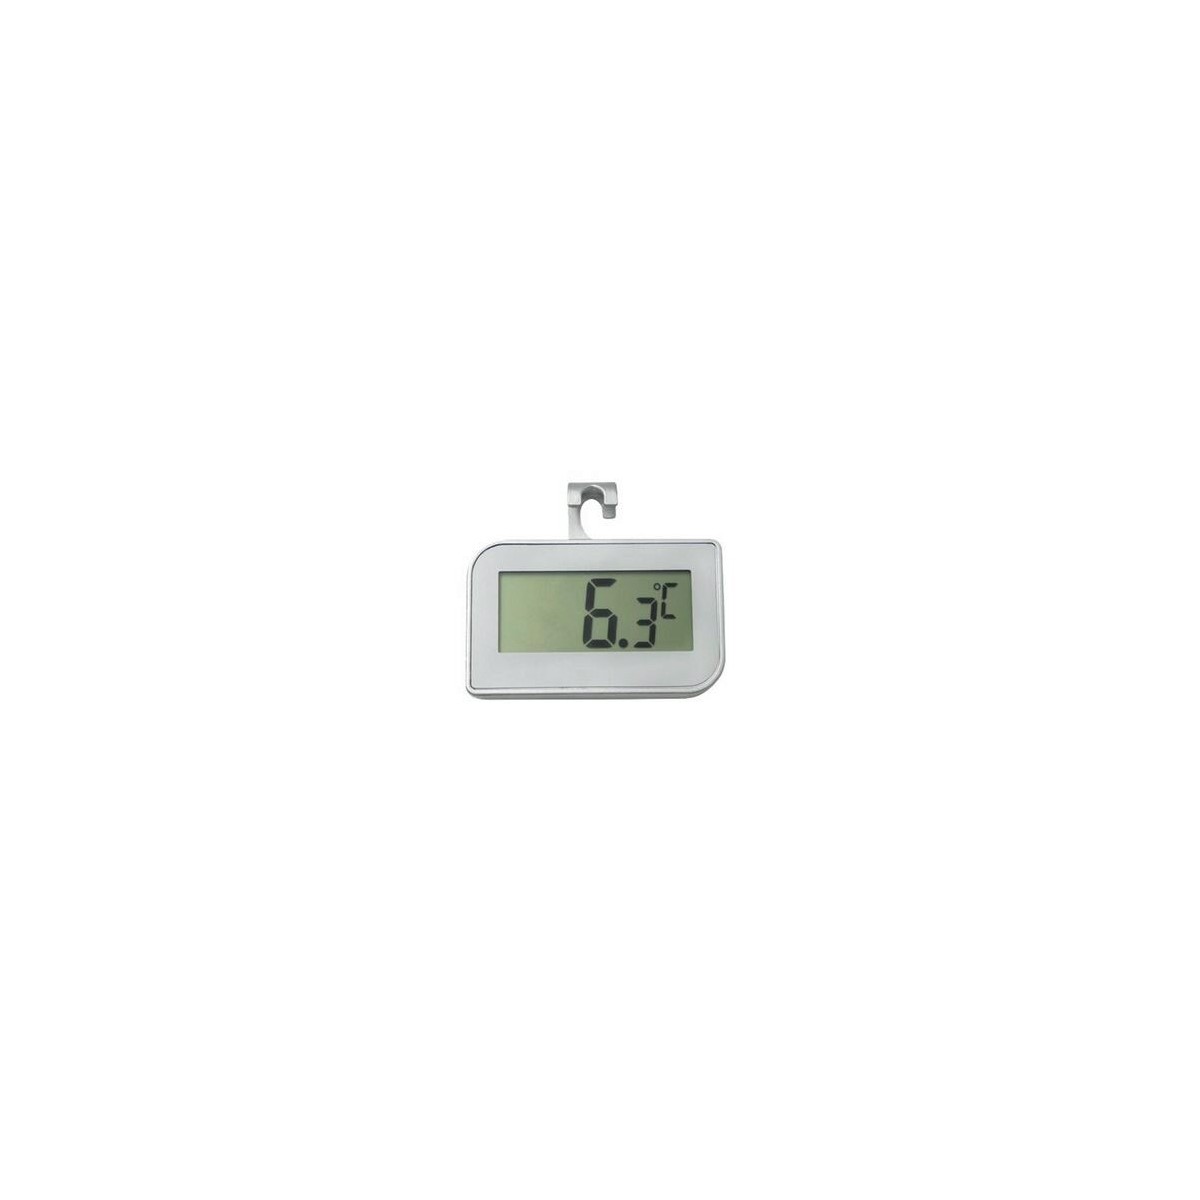 DIGITAAL THERMOMETER VOOR KOELKAST IP65 MET HAAK -20° TOT +50°C